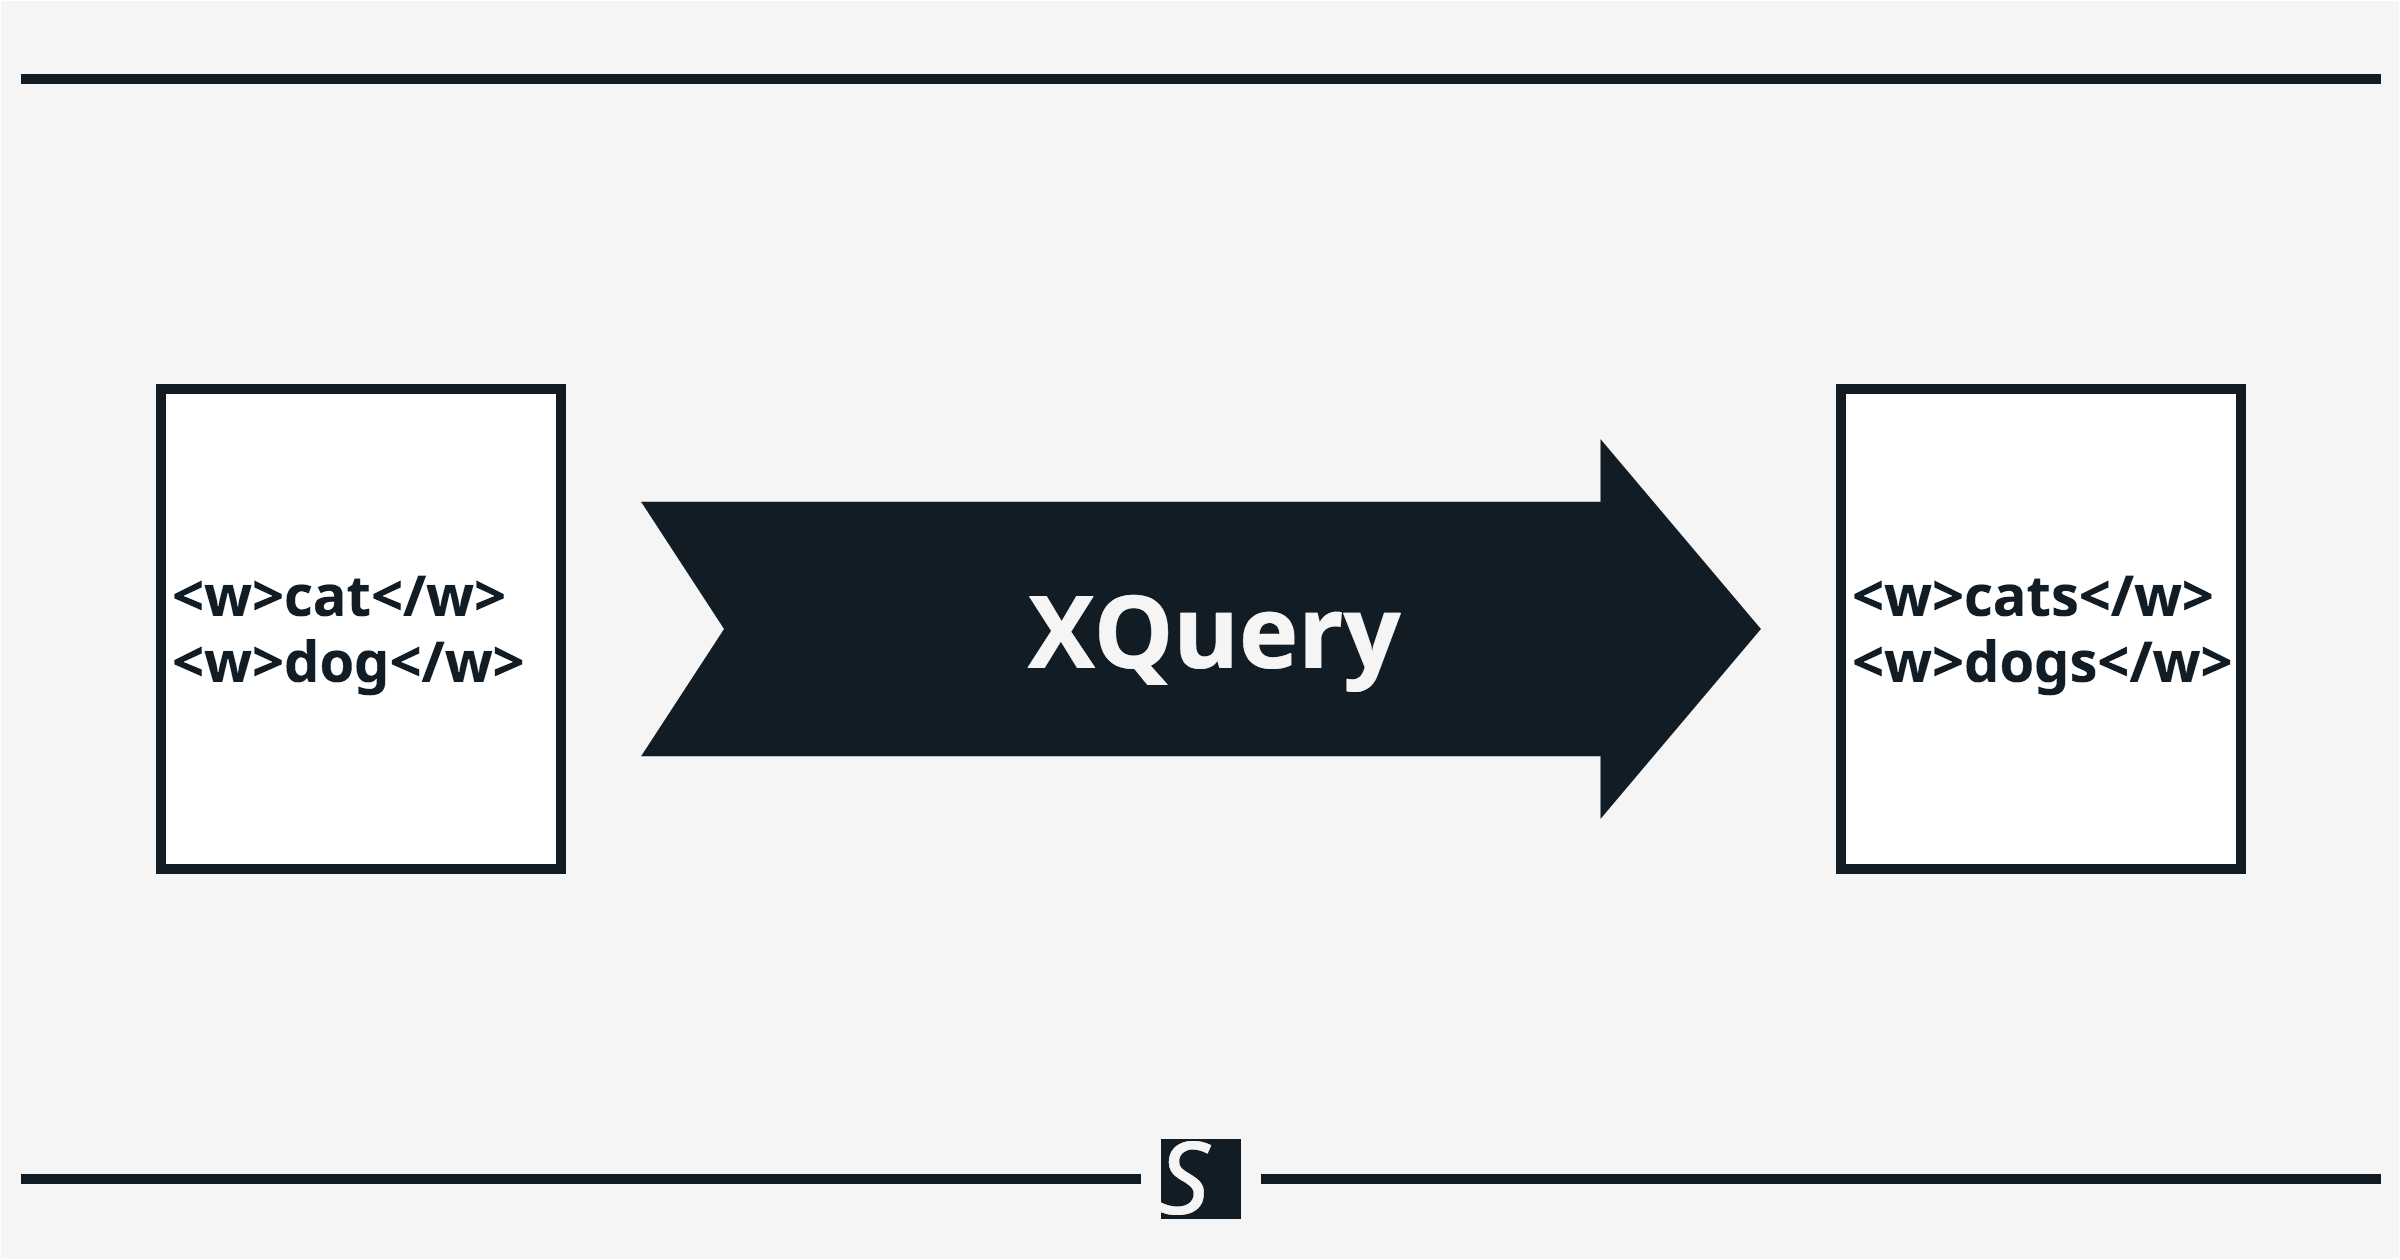 Memanipulasi Data Teks XML Menggunakan Fungsi String XQuery